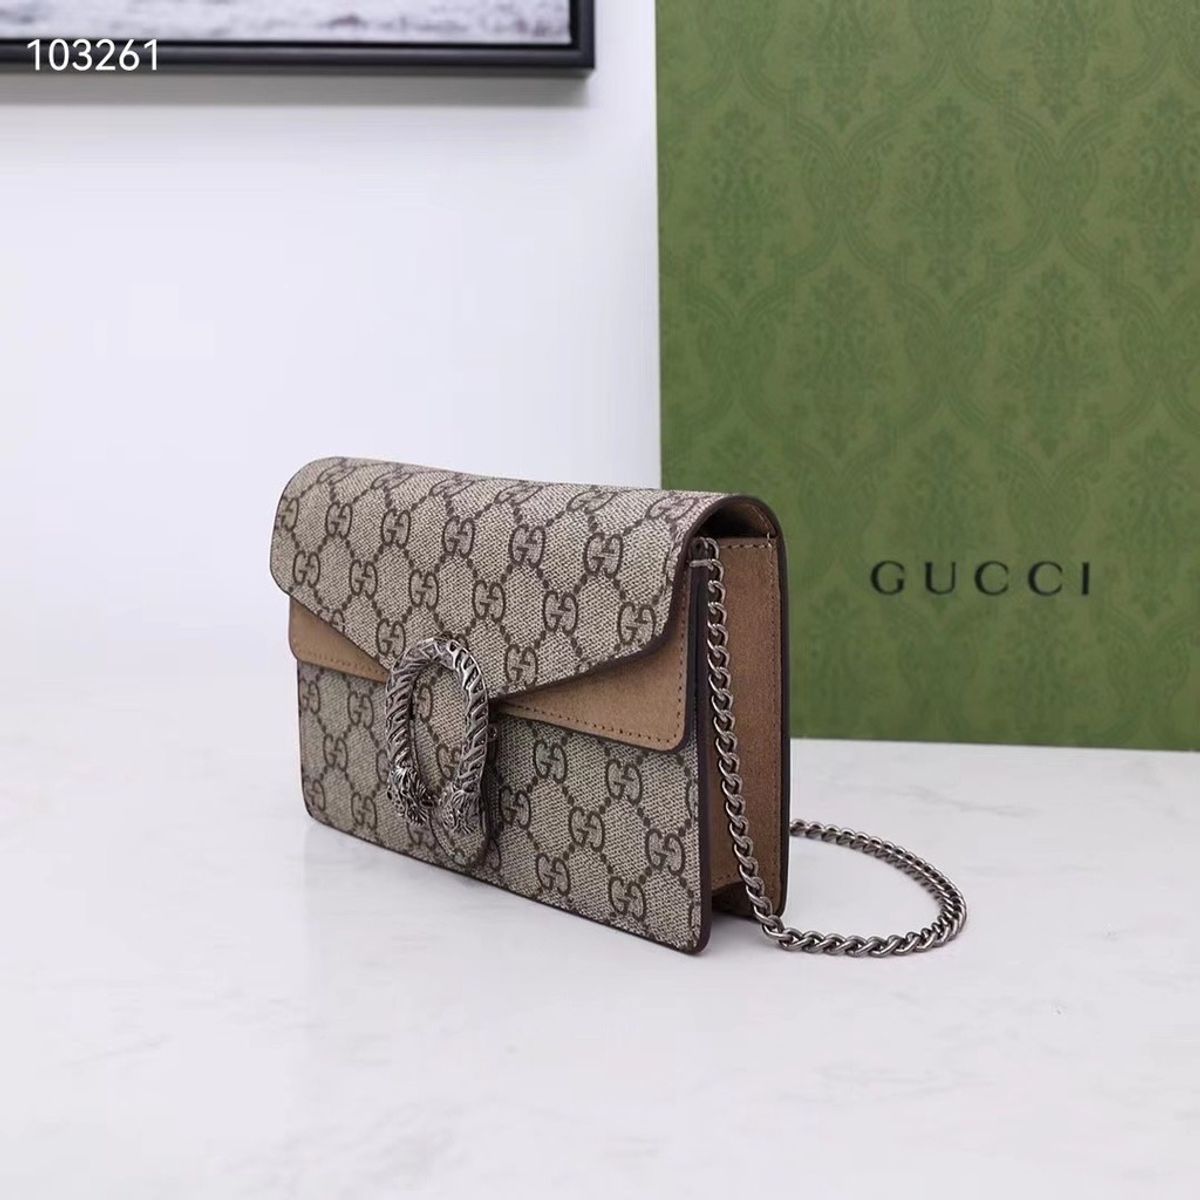 Bolsa Gucci Interlocking Preta, Original, Bolsa de Ombro Feminina Gucci  Usado 89903759